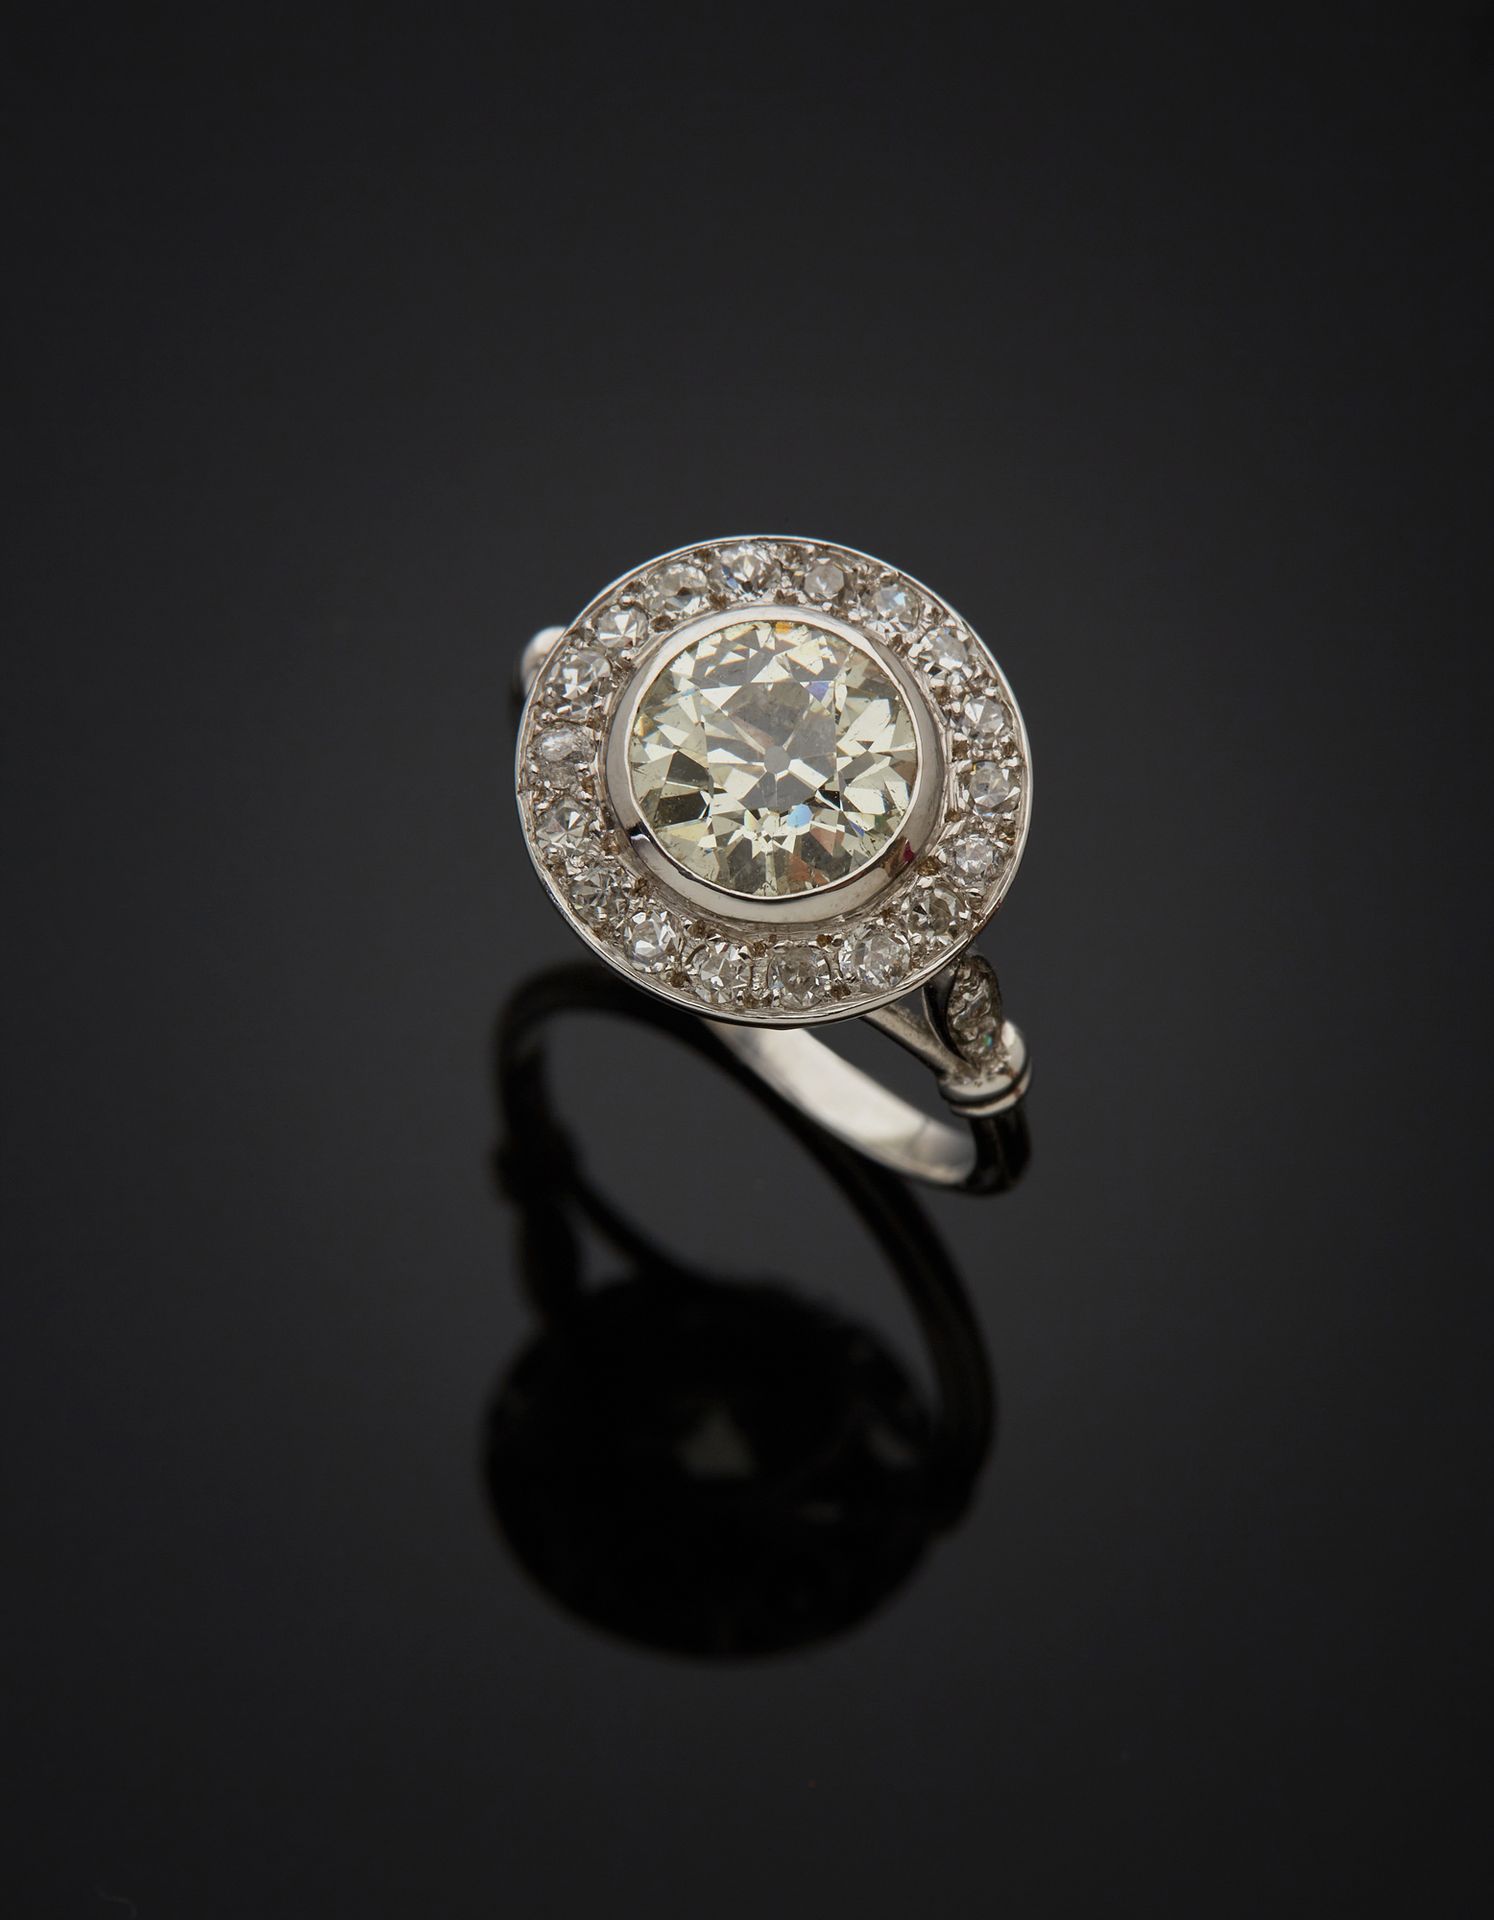 Null 一枚18K白金750‰戒指，圆形，中央镶嵌着一颗封闭式的老式切割钻石，周围环绕着8-8和老式切割钻石，肩部有两个手掌，上面镶嵌着2乘3的8-8钻石。
&hellip;